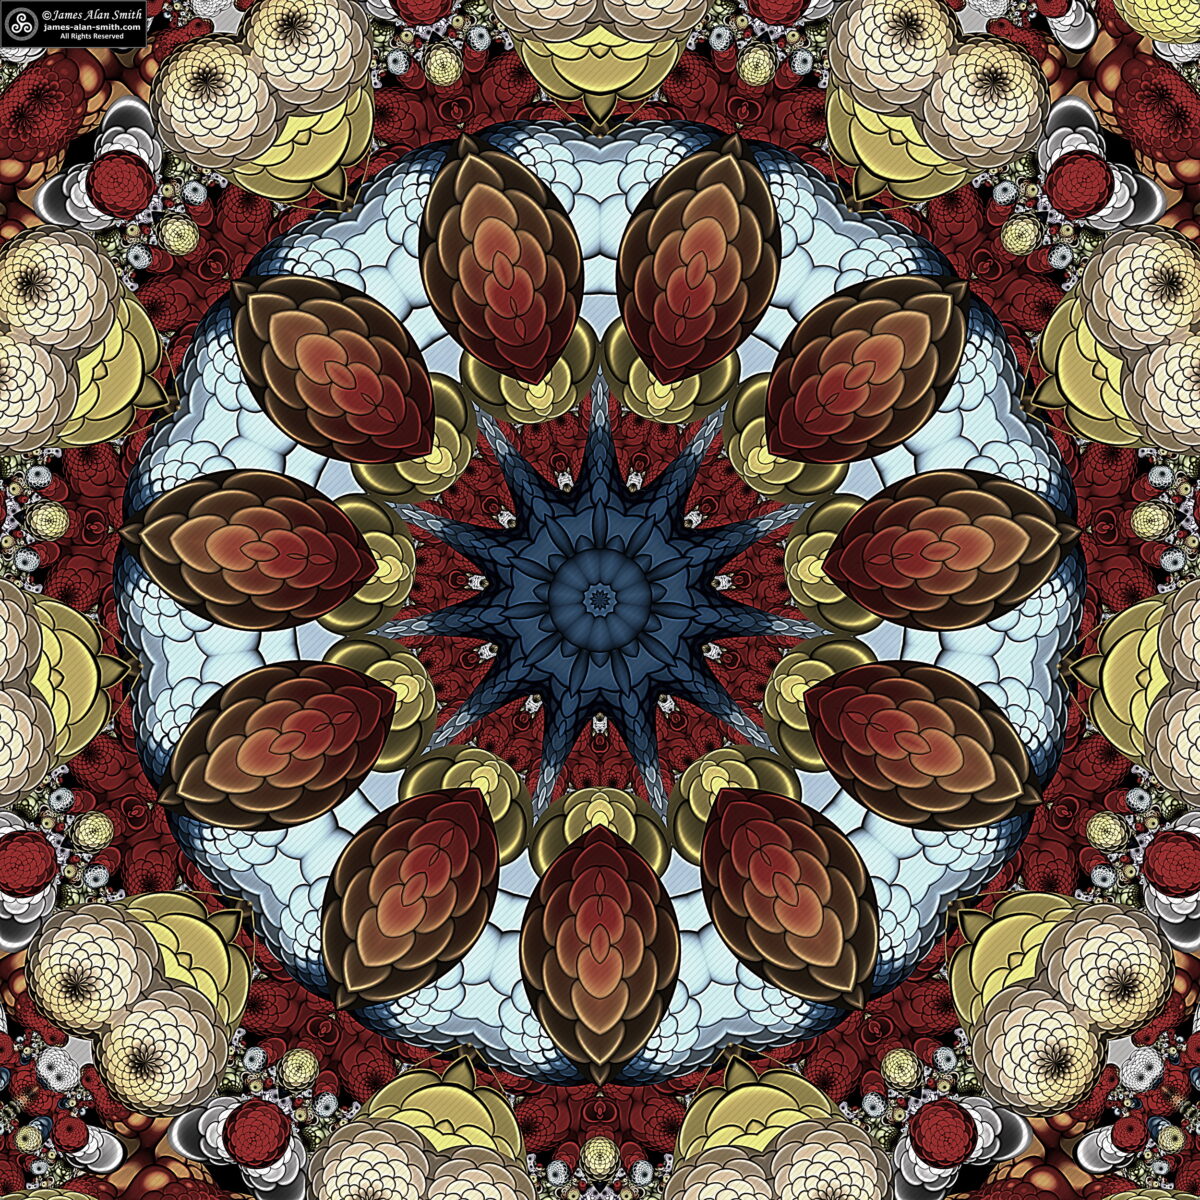 Unusual Mandala Series #120521: Artwork by James Alan Smith